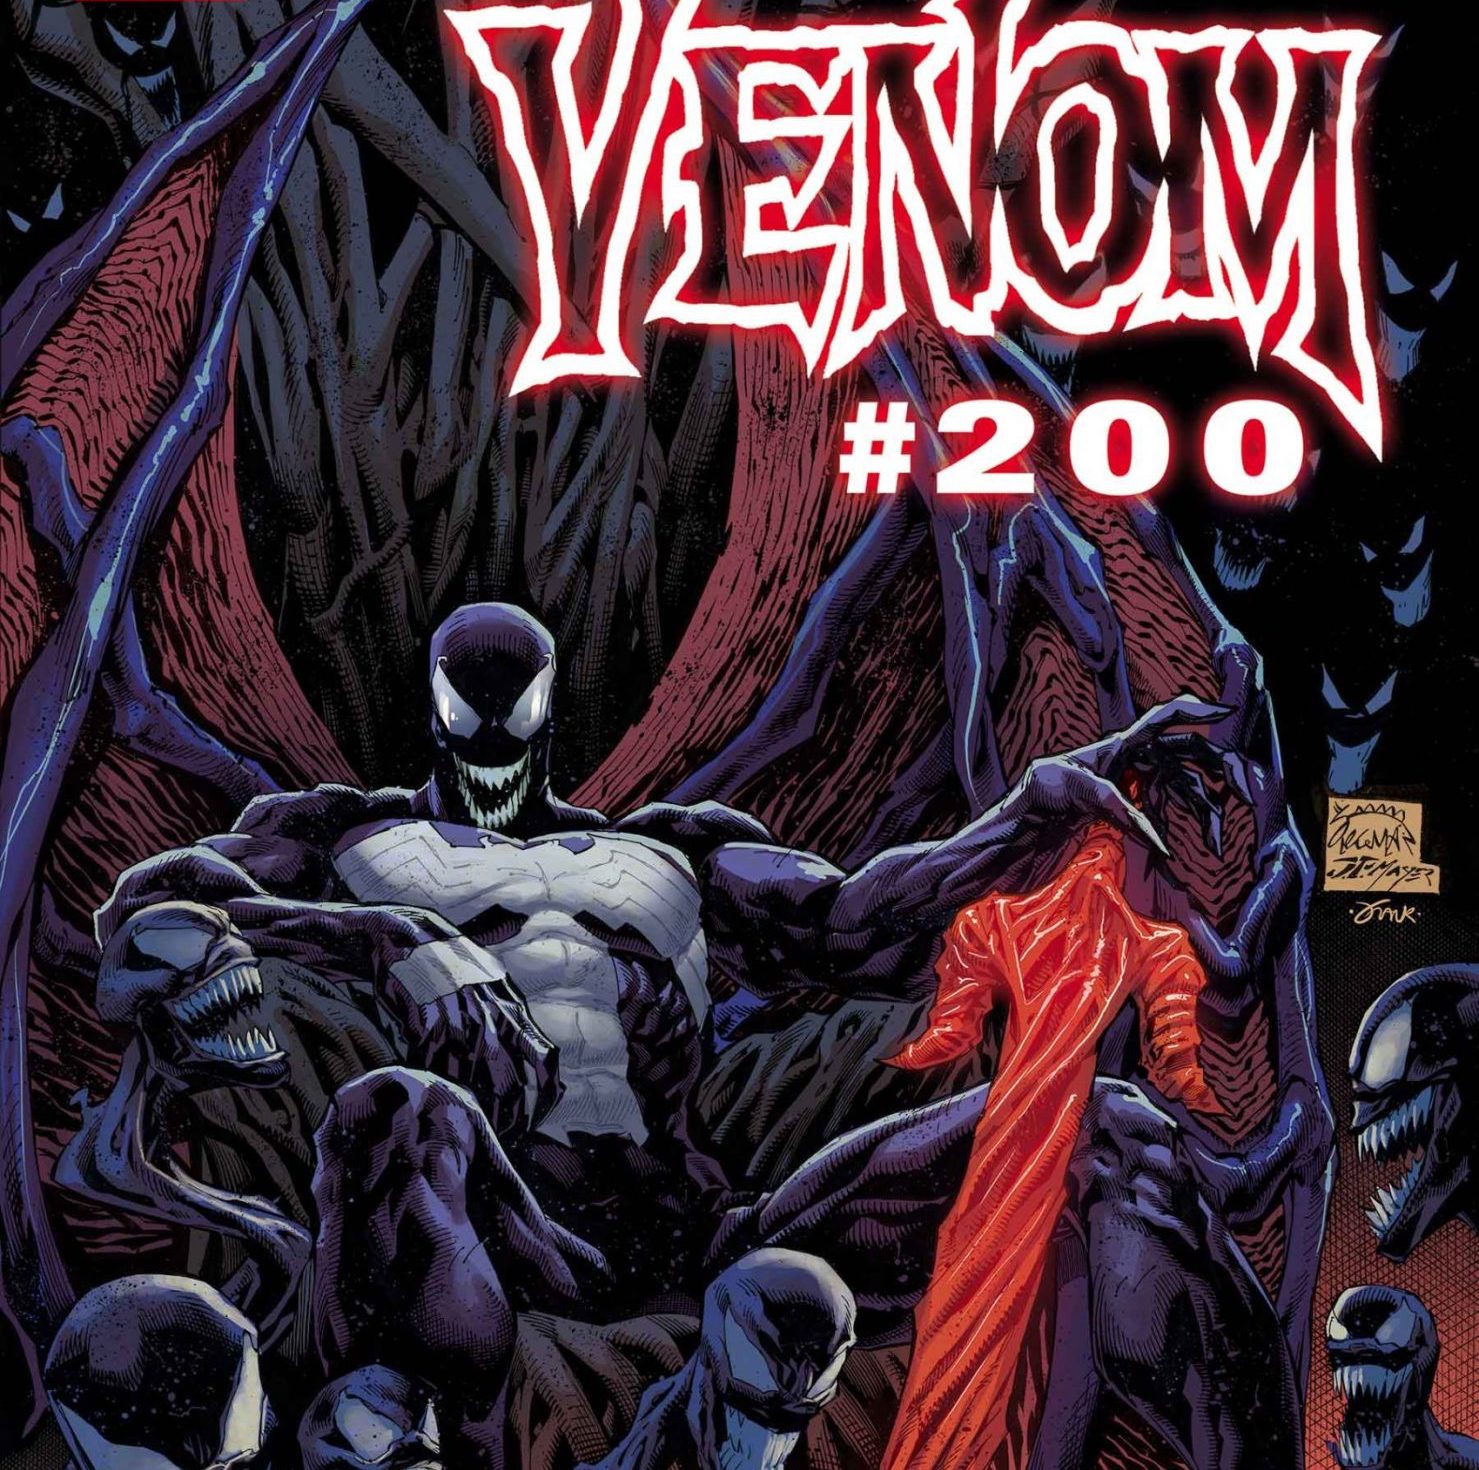 'Venom' #200 elevates the character (again!)